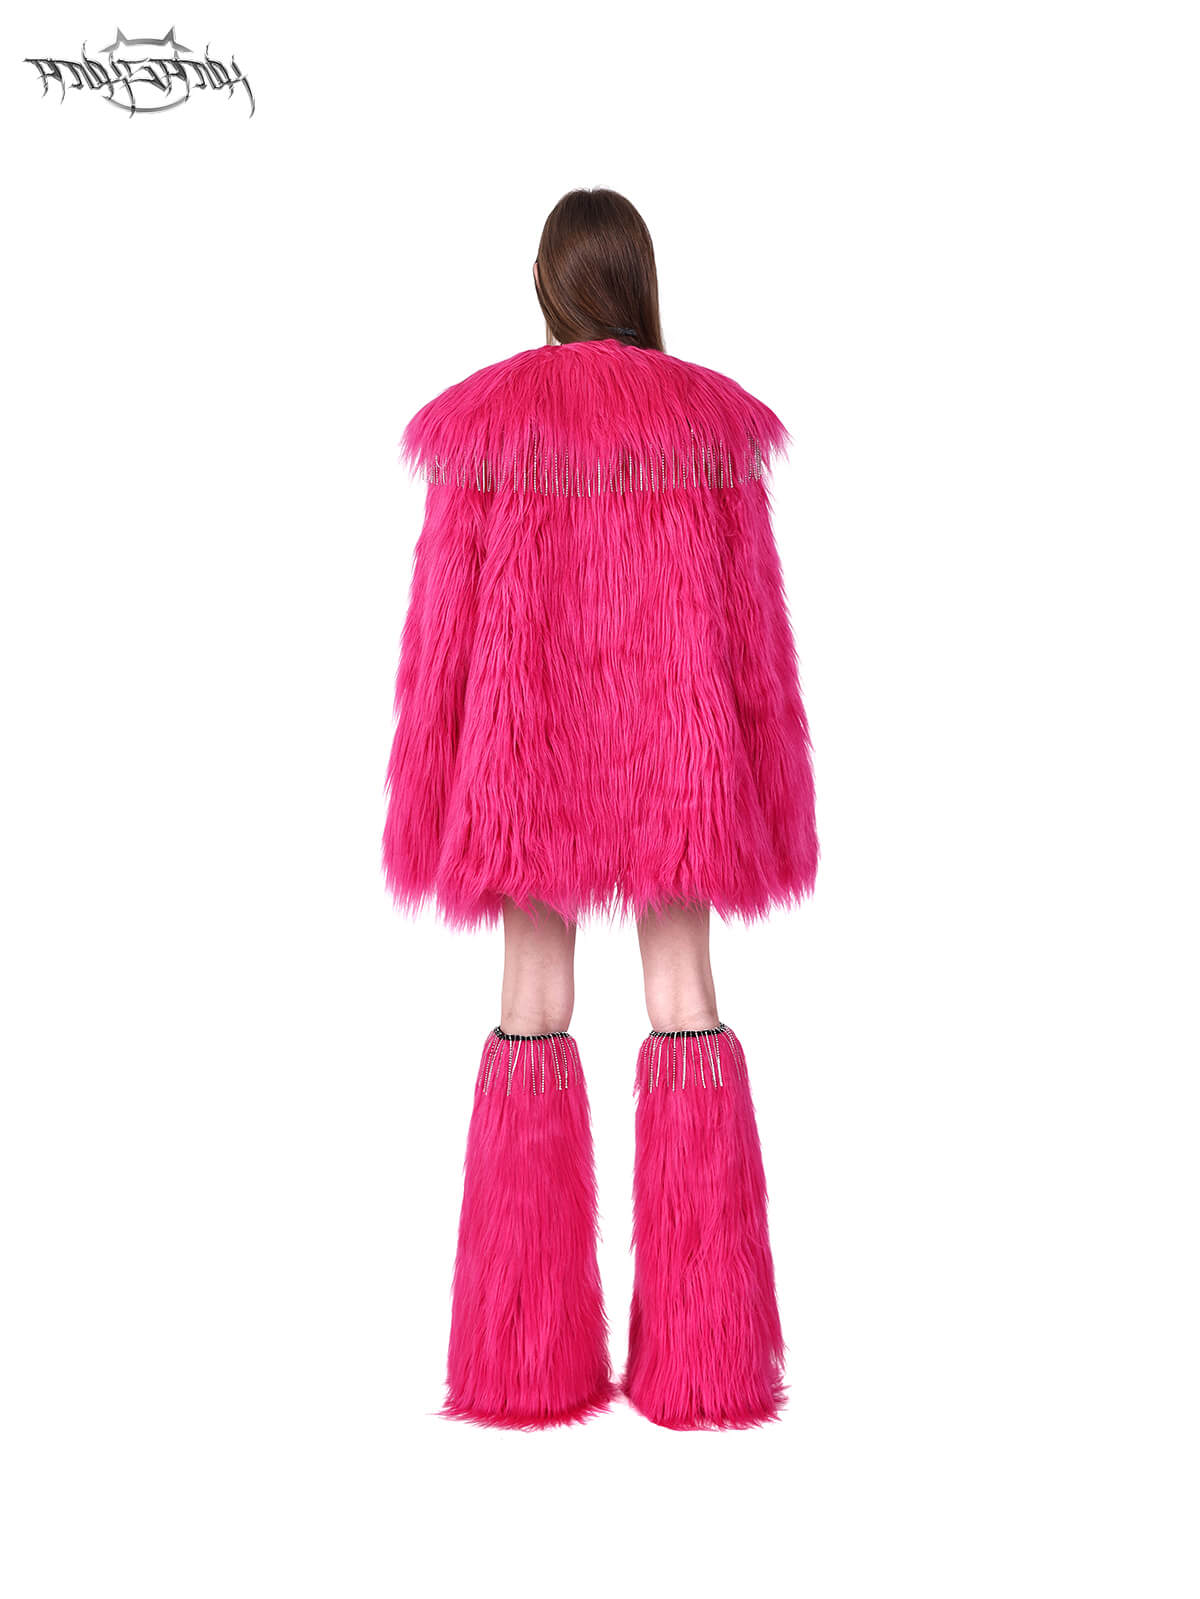 Barbie styled fur coat